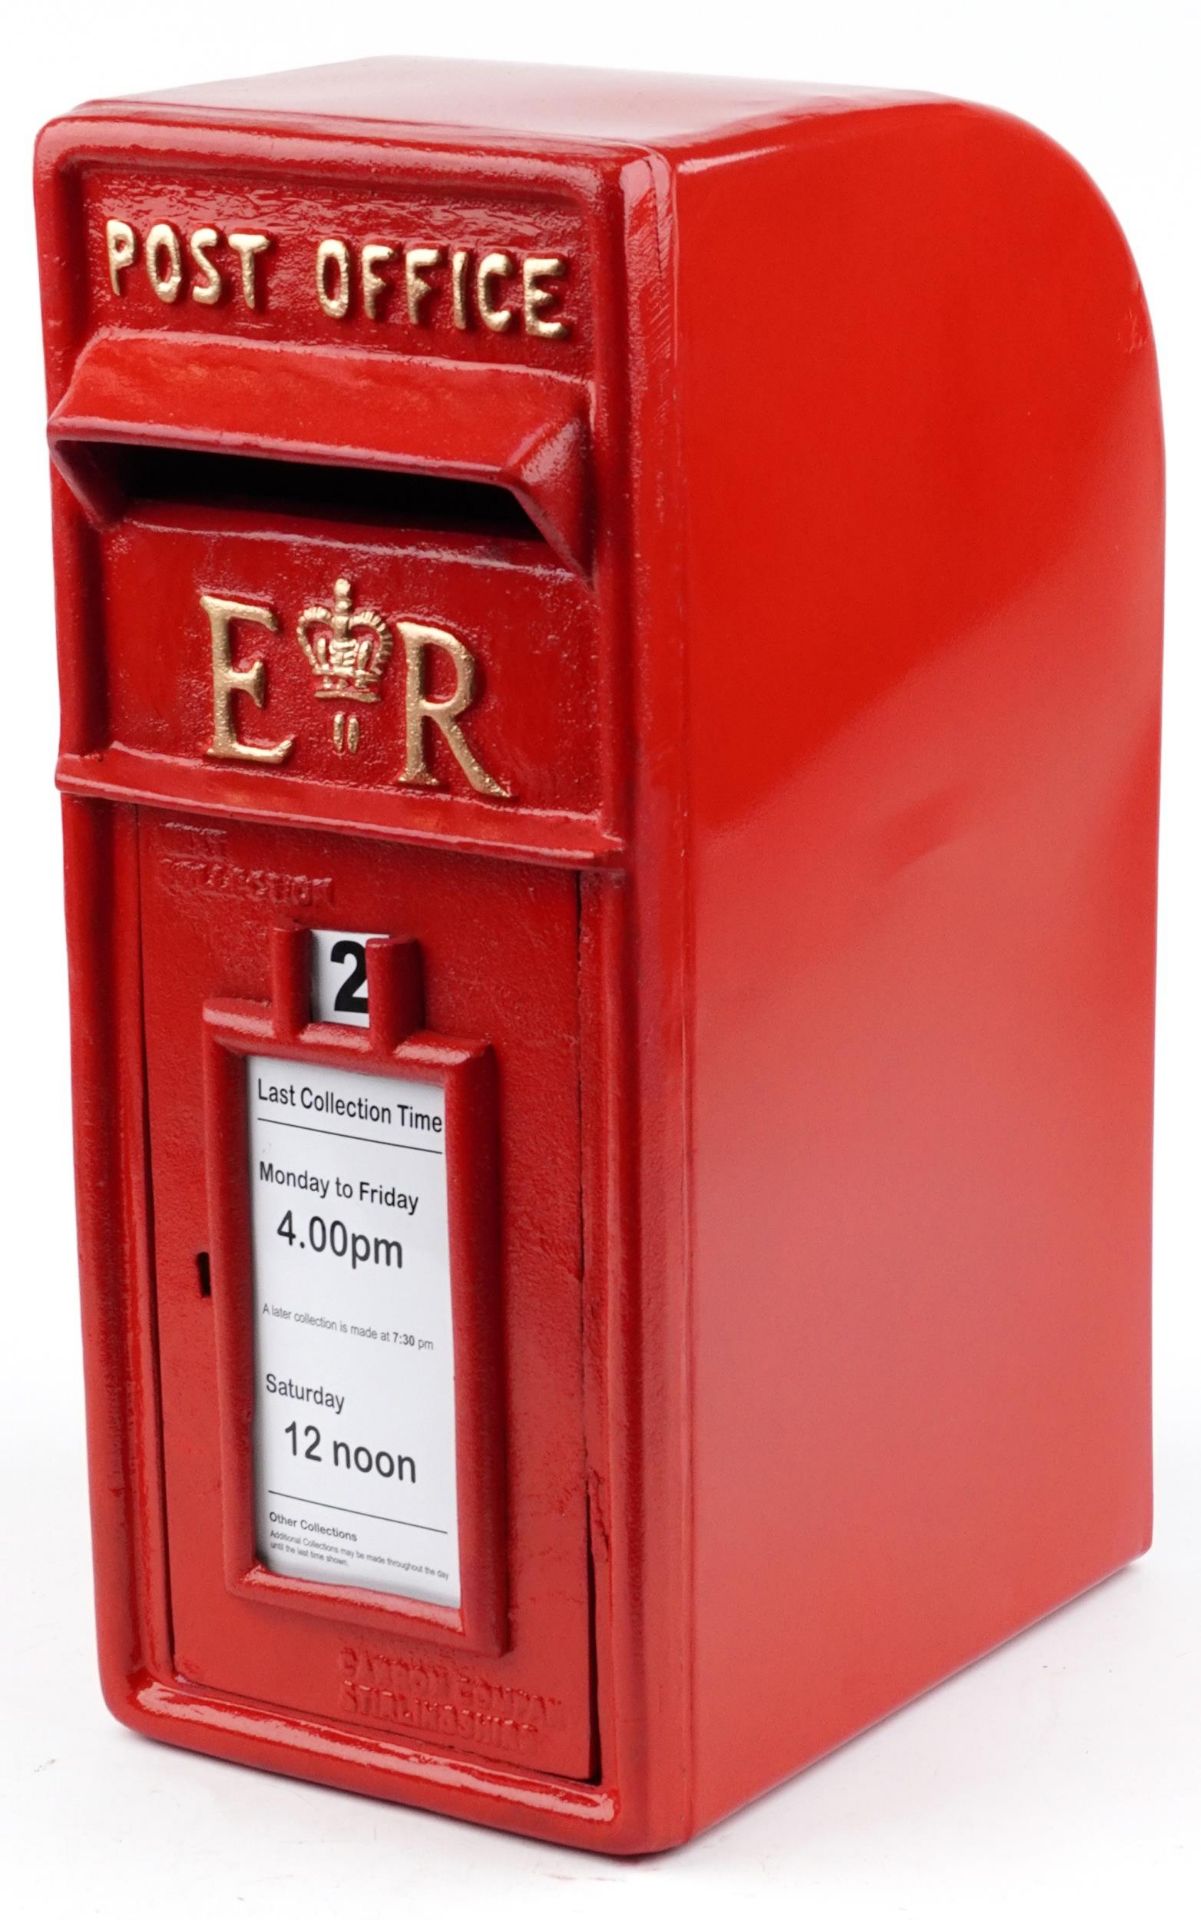 Elizabeth II style red painted metal postbox, 56cm high